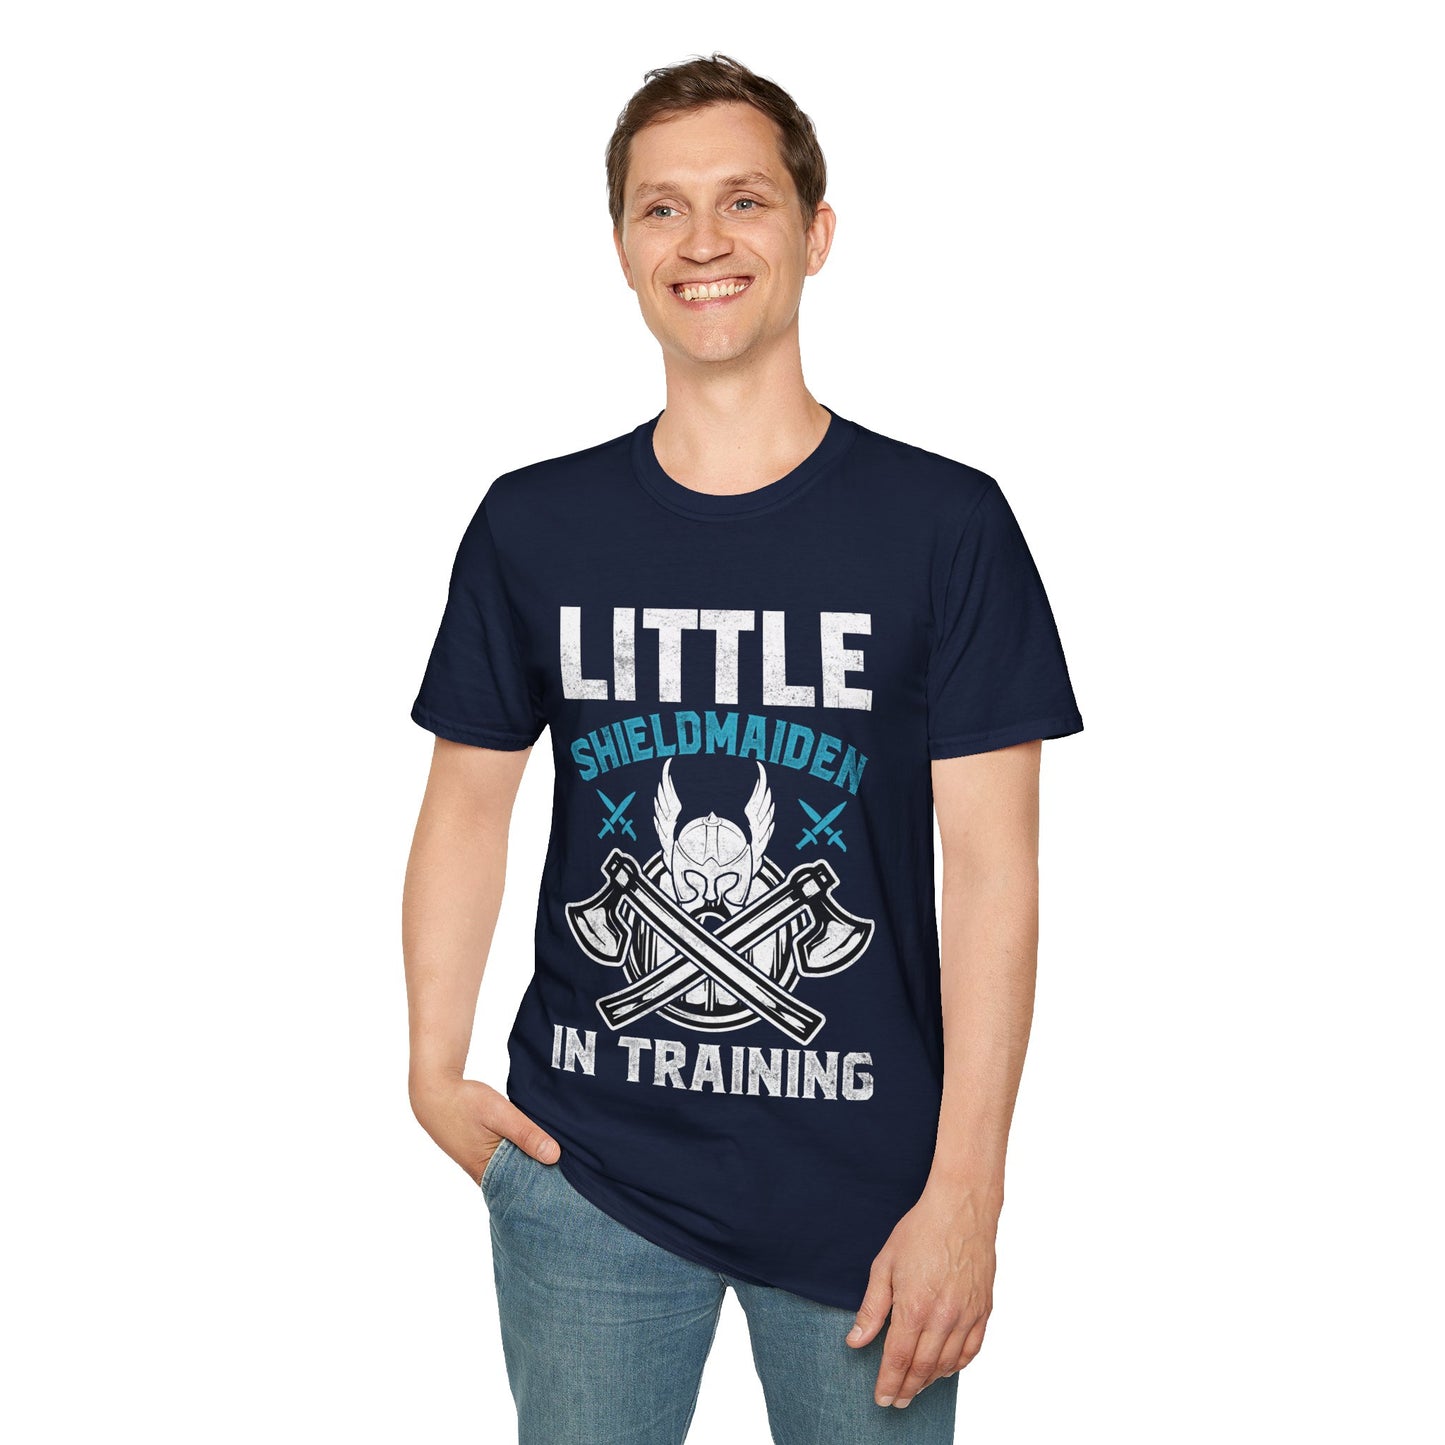 Little Shieldmaiden In Training T-Shirt